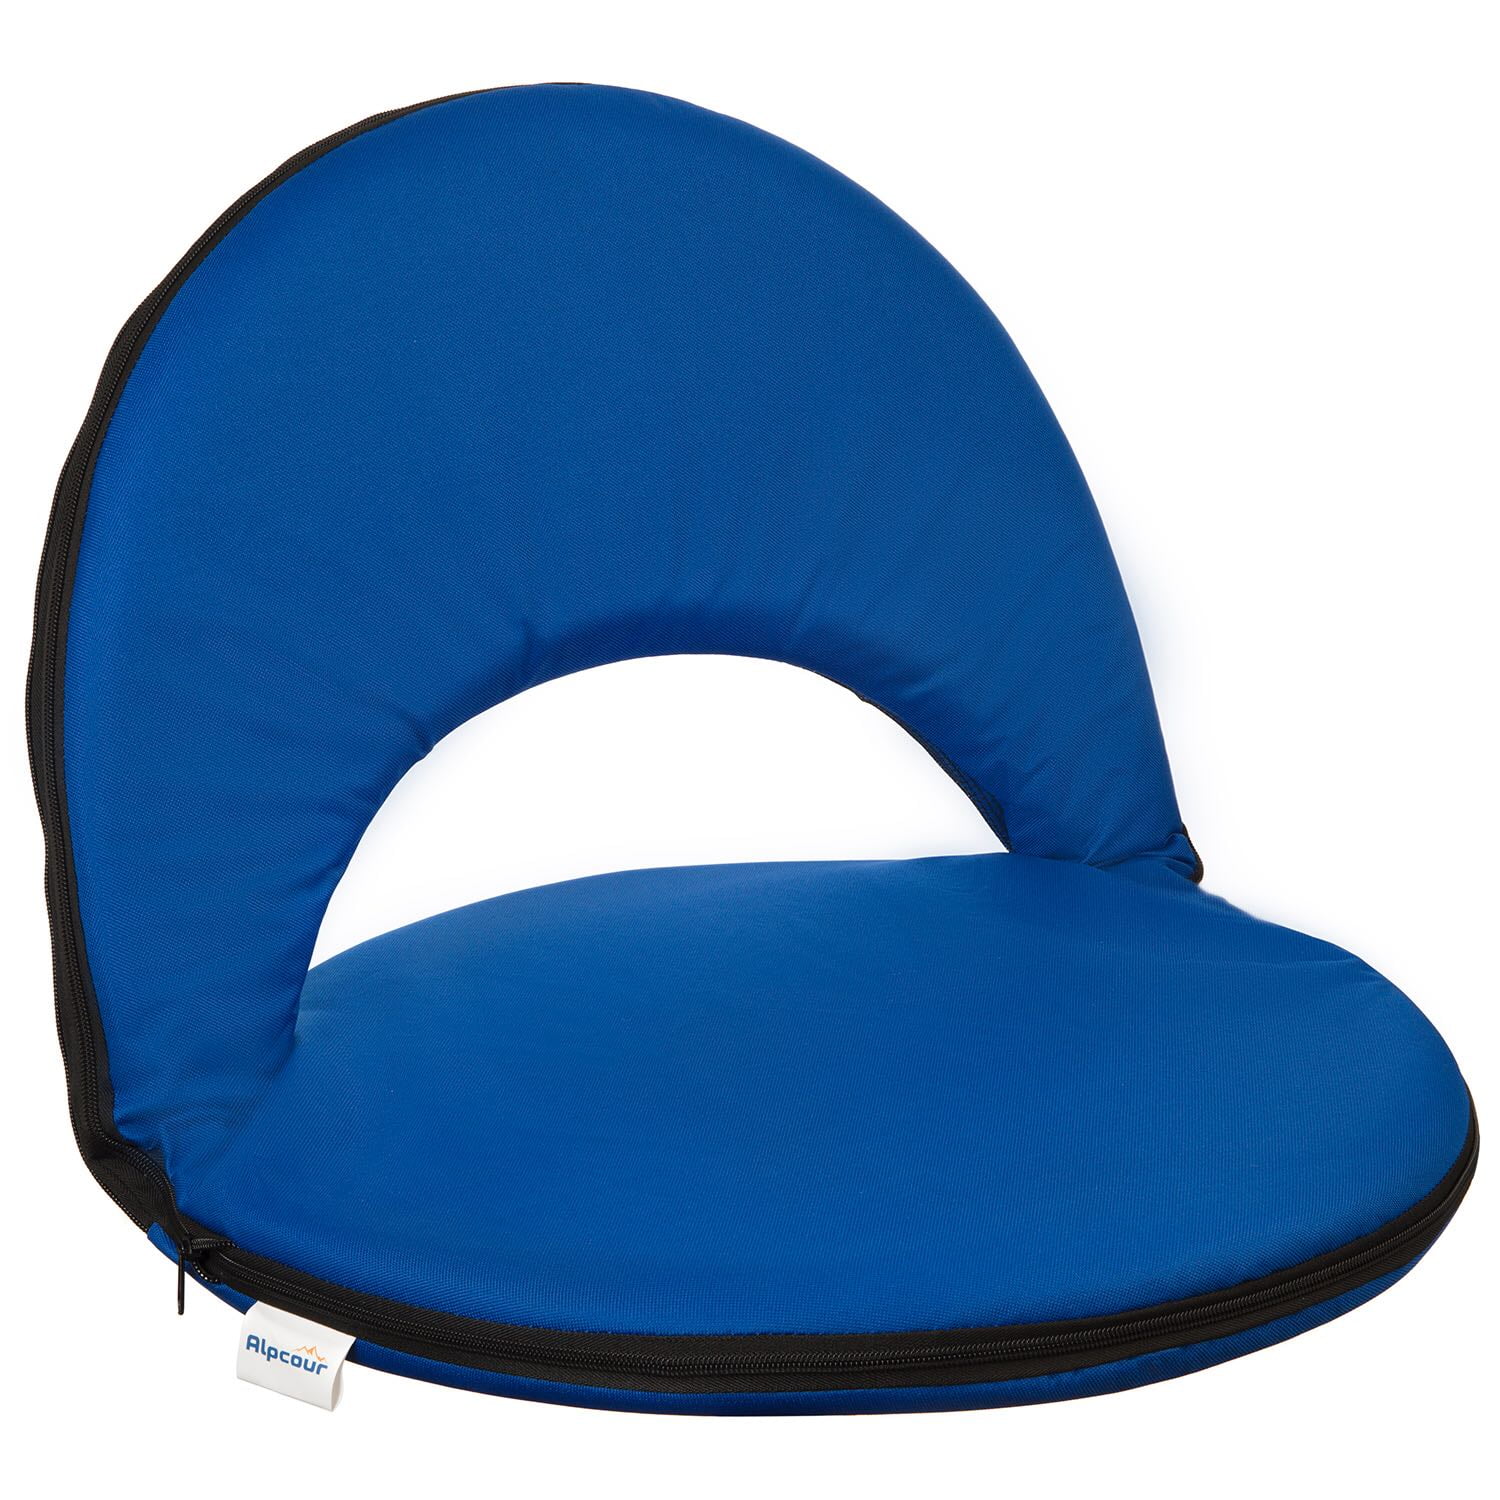 Yosoo Stadium Seat,Oxford Cloth Folding Padded Cushion Chair Seat Stadium Bleacher Sports Recliner Perfect for Picnic/Camping/Festivals